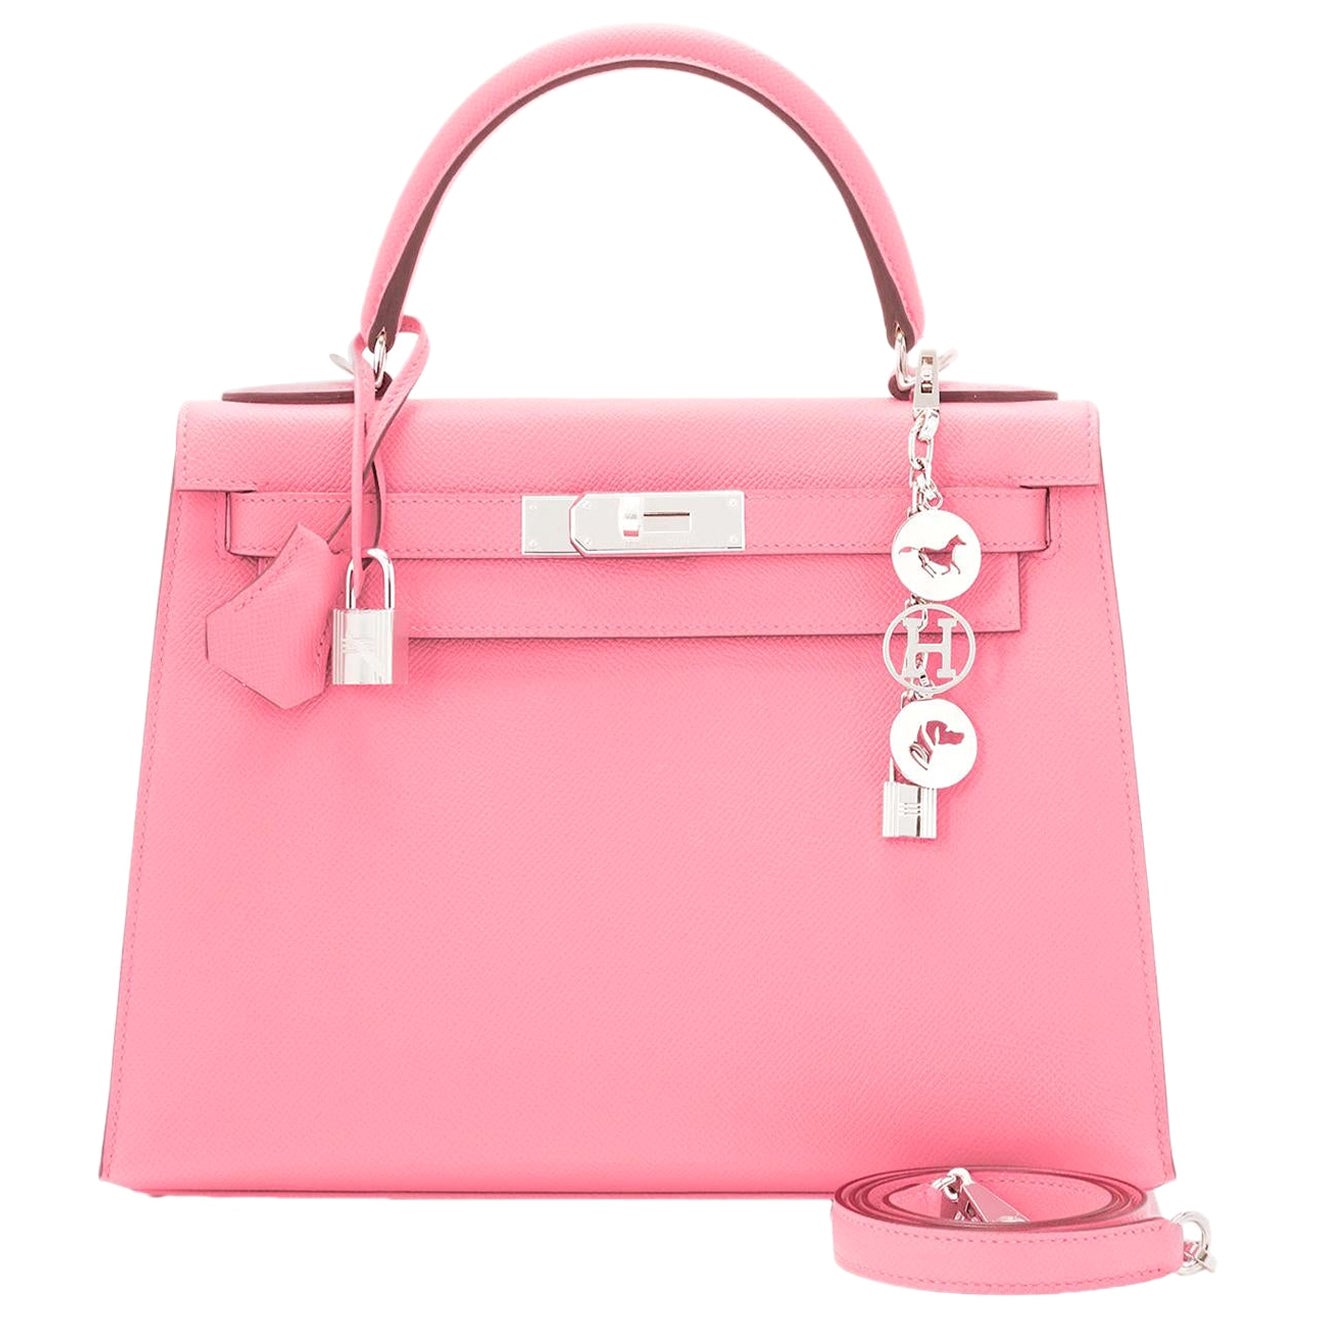 Hermes Kelly 28cm Rose Confetti Pink Sellier Shoulder Bag NEW IN BOX